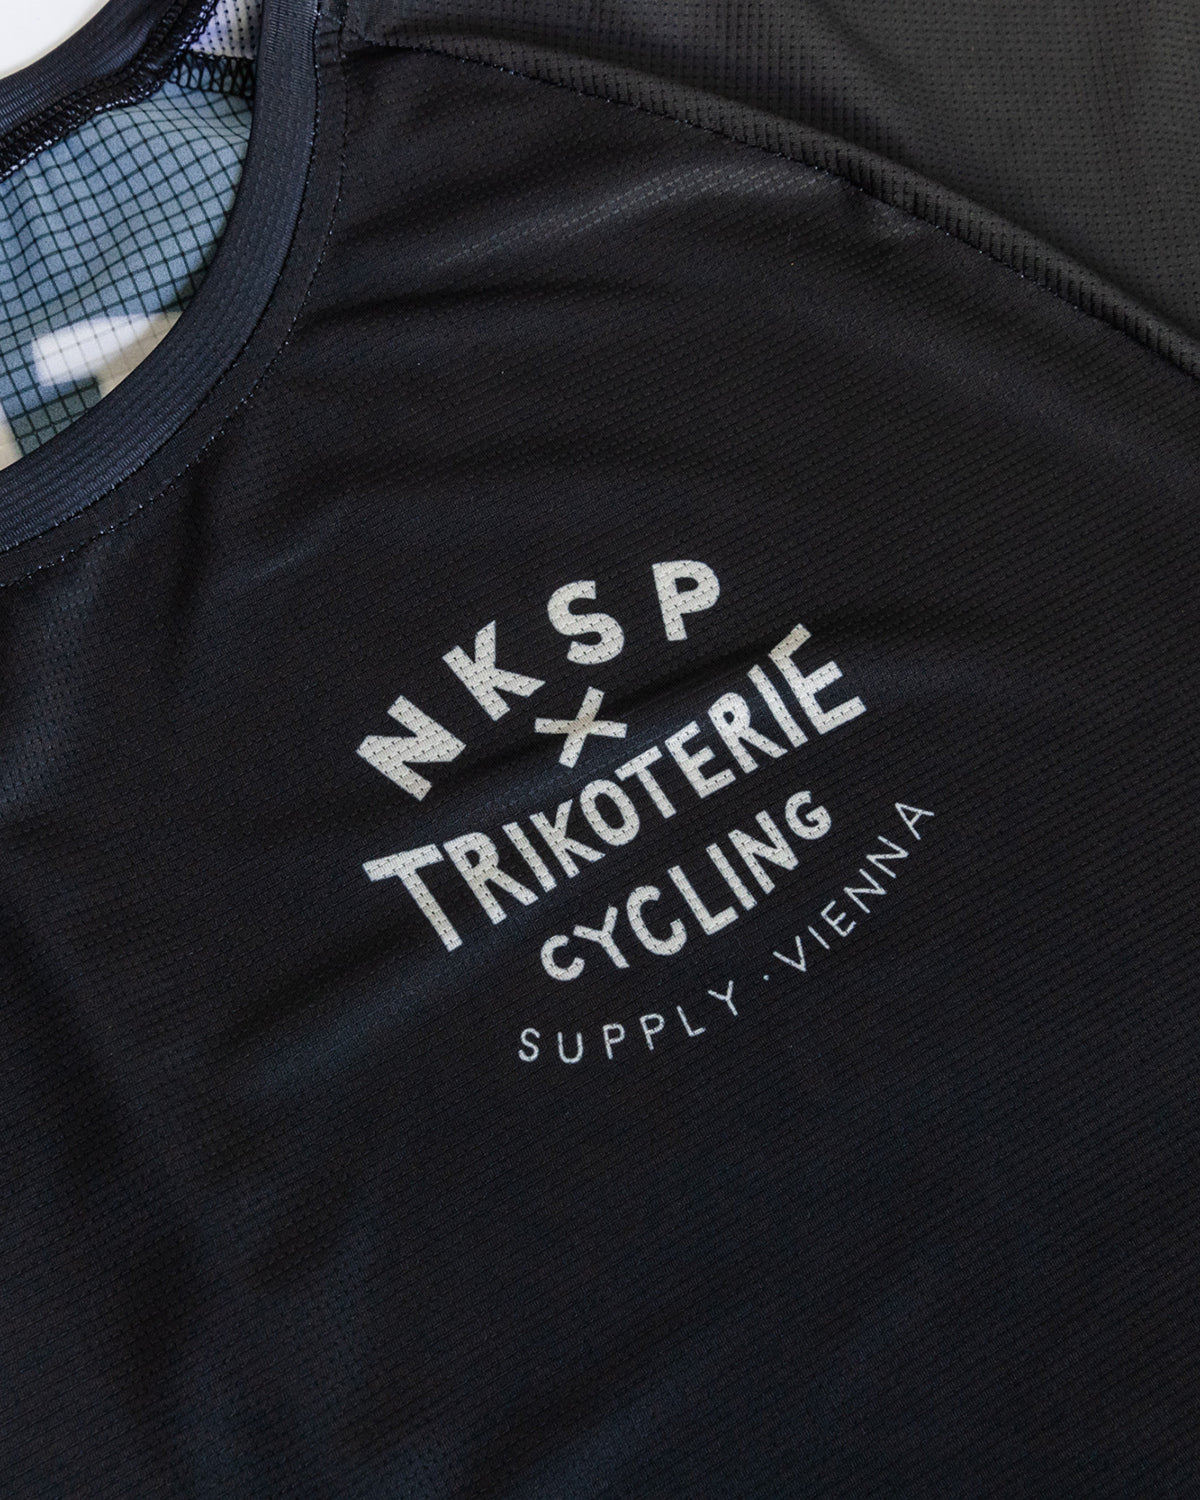 Trail Shirt - Blaze The Trail - NKSP x Trikoterie